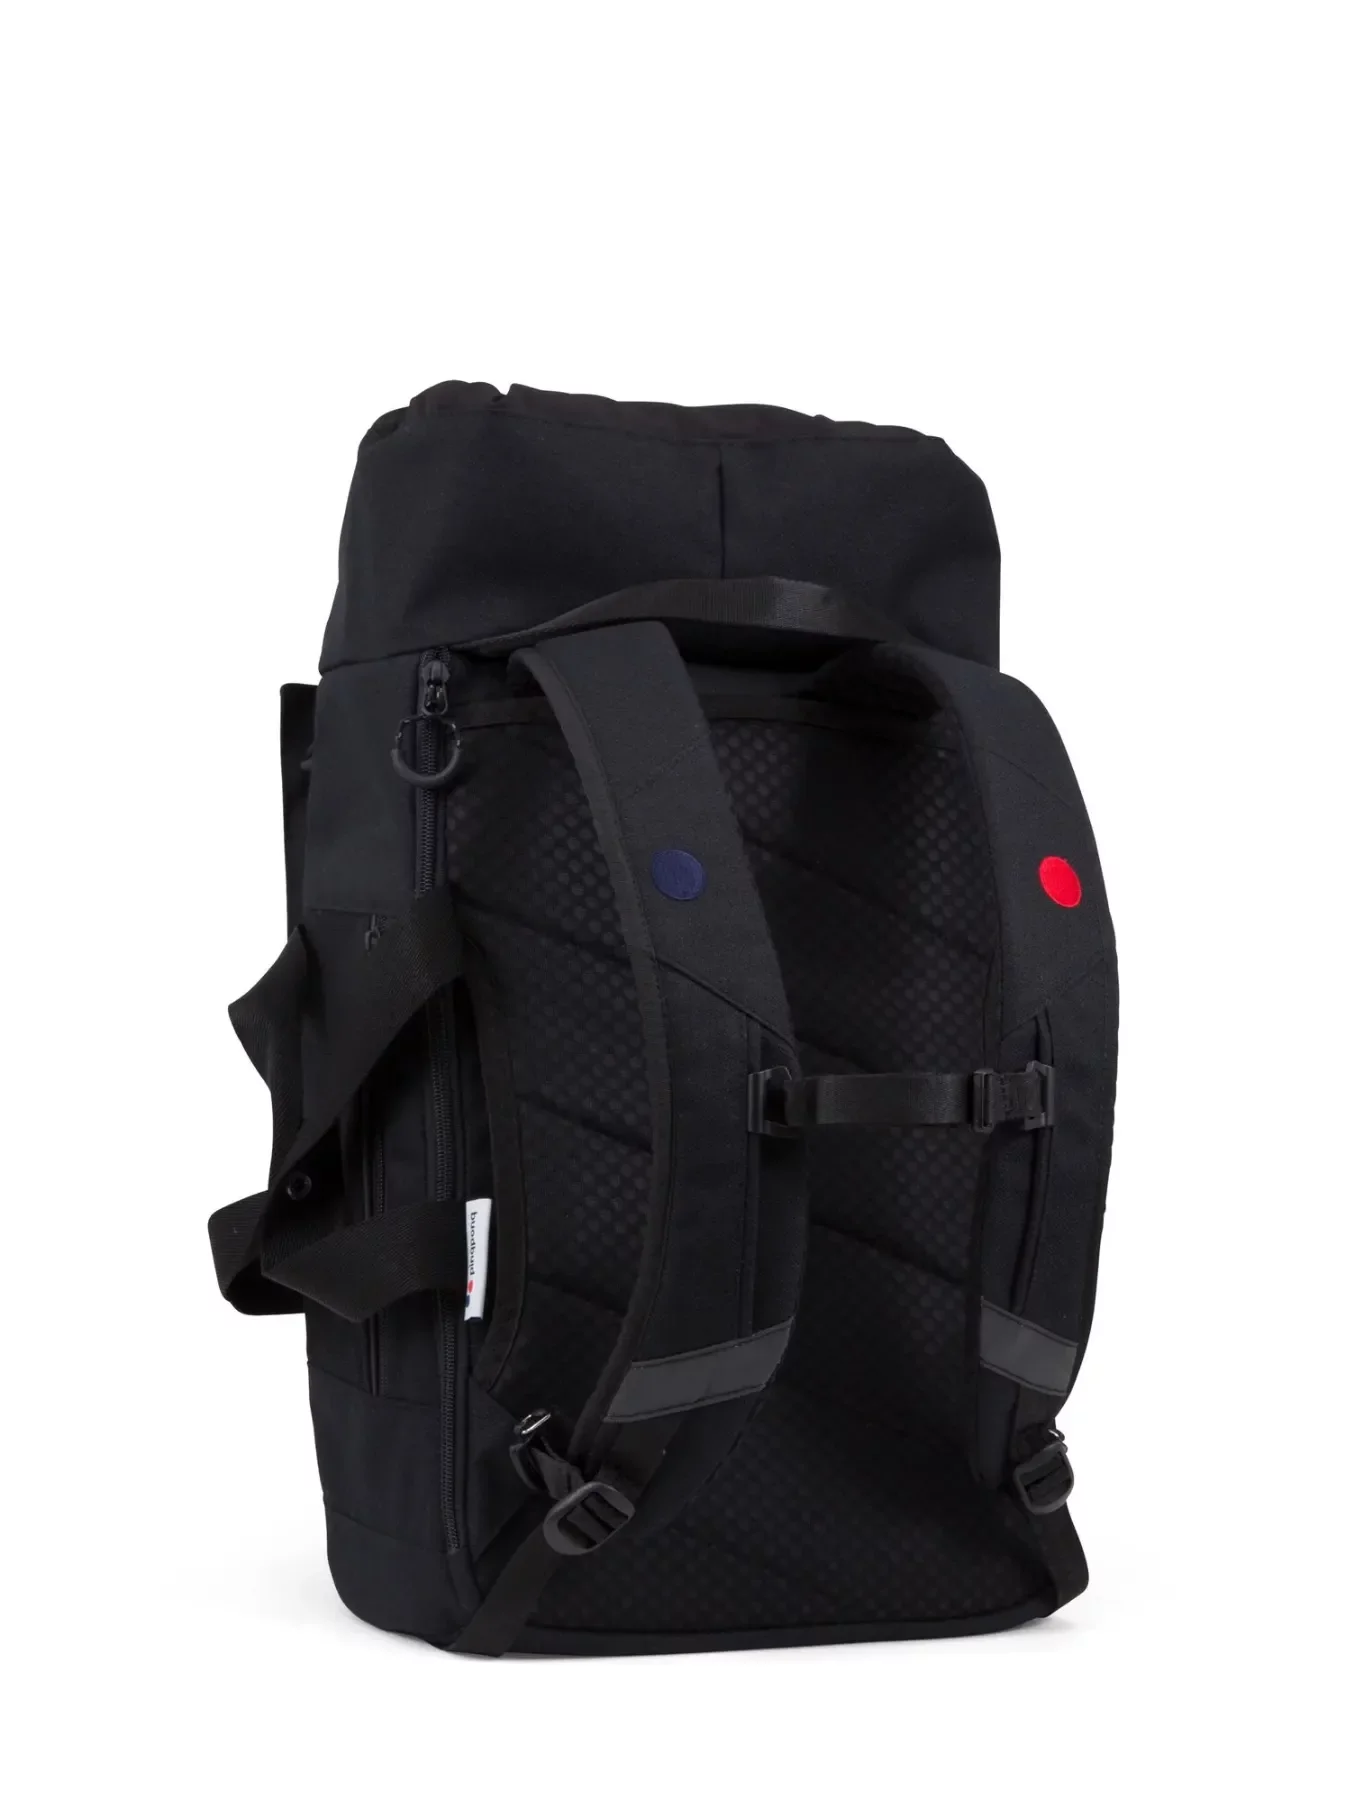 pinqponq Backpack BLOK medium - Licorice Black 4